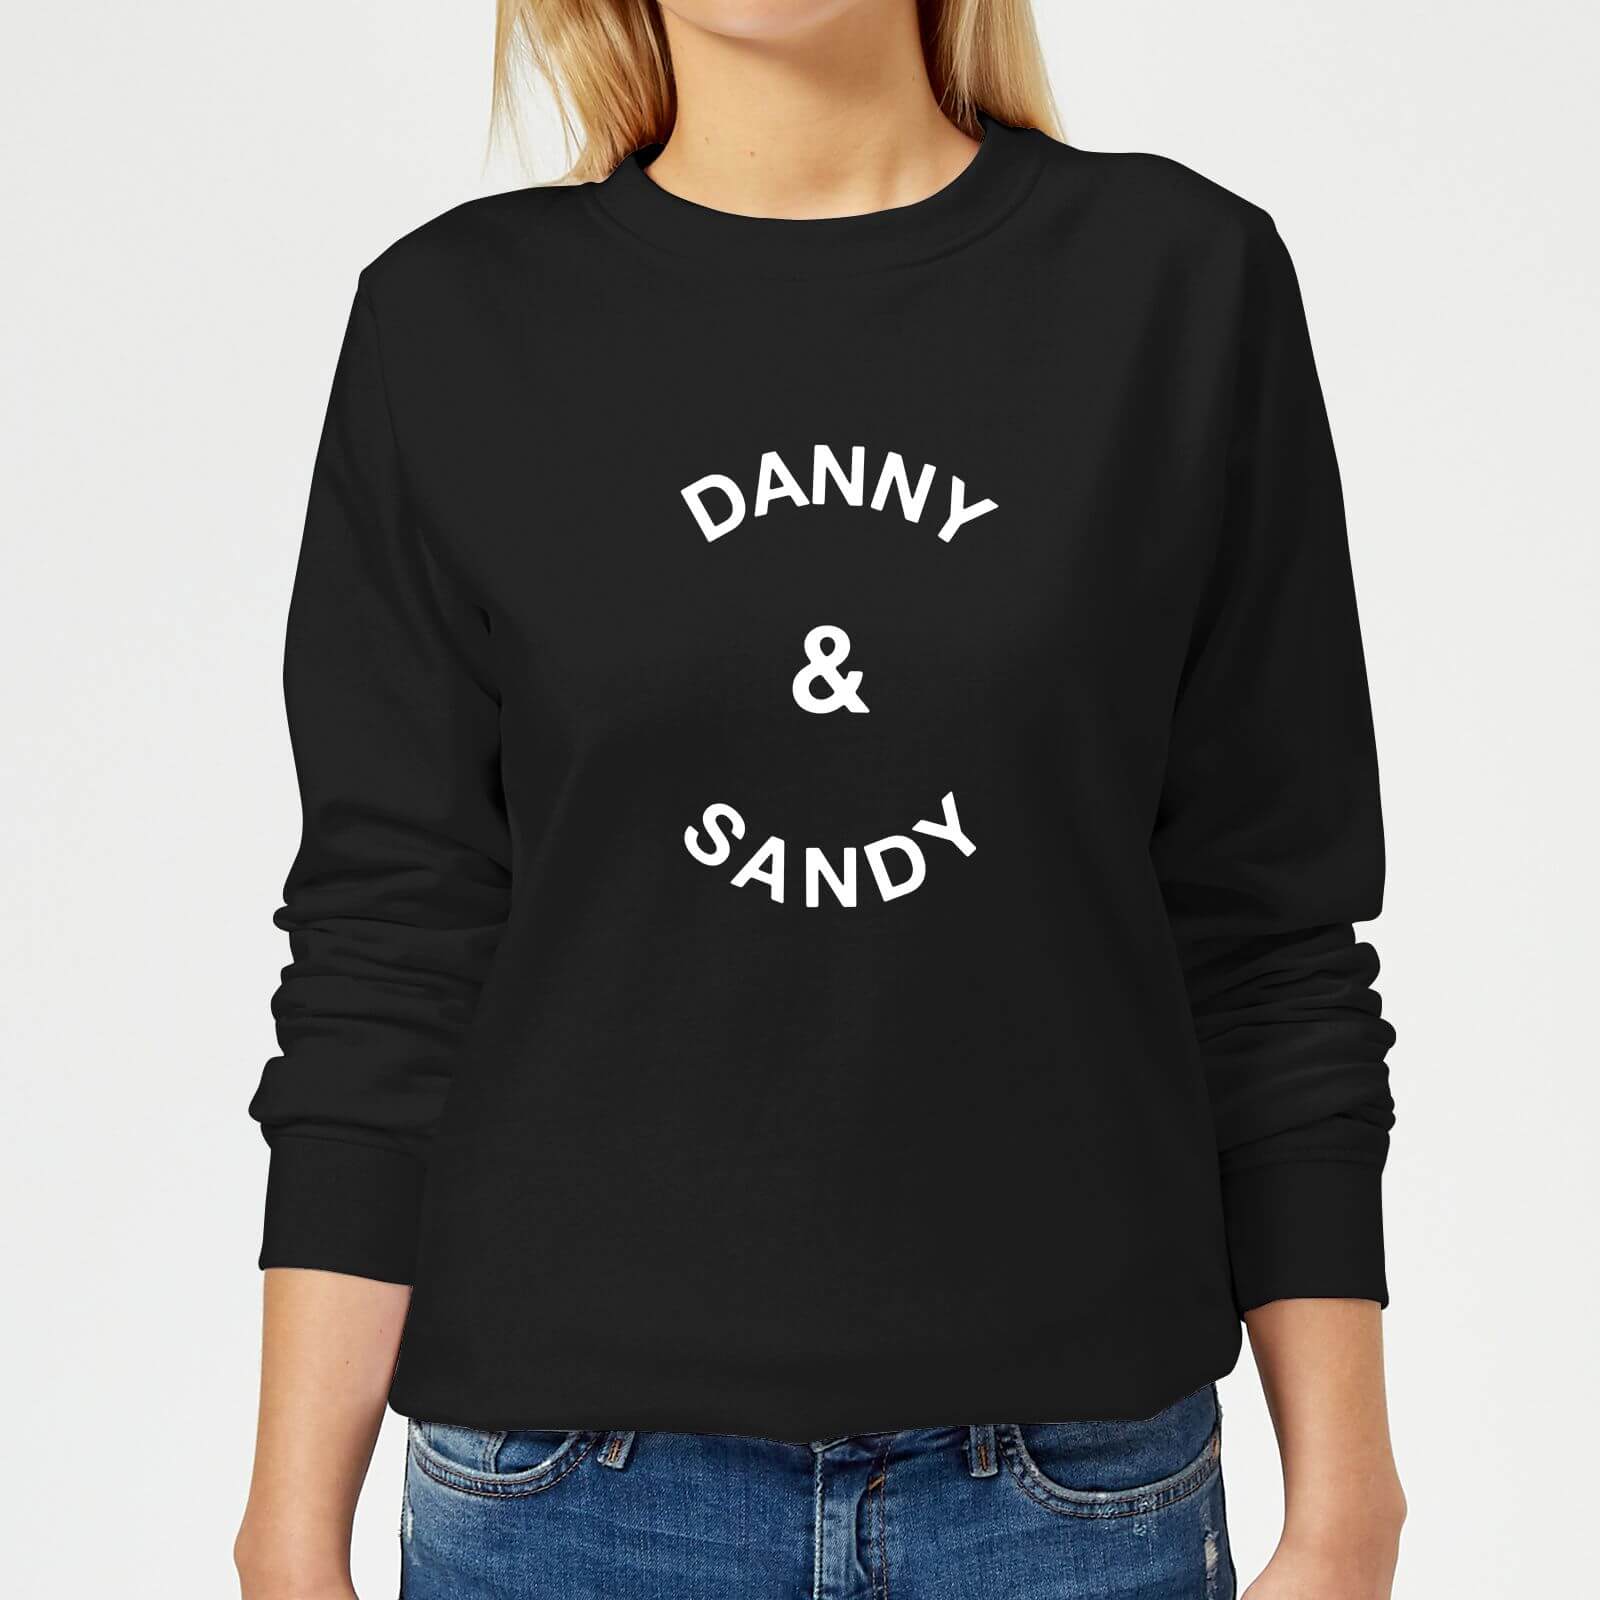 Danny & Sandy Women's Sweatshirt - Black - S - Black